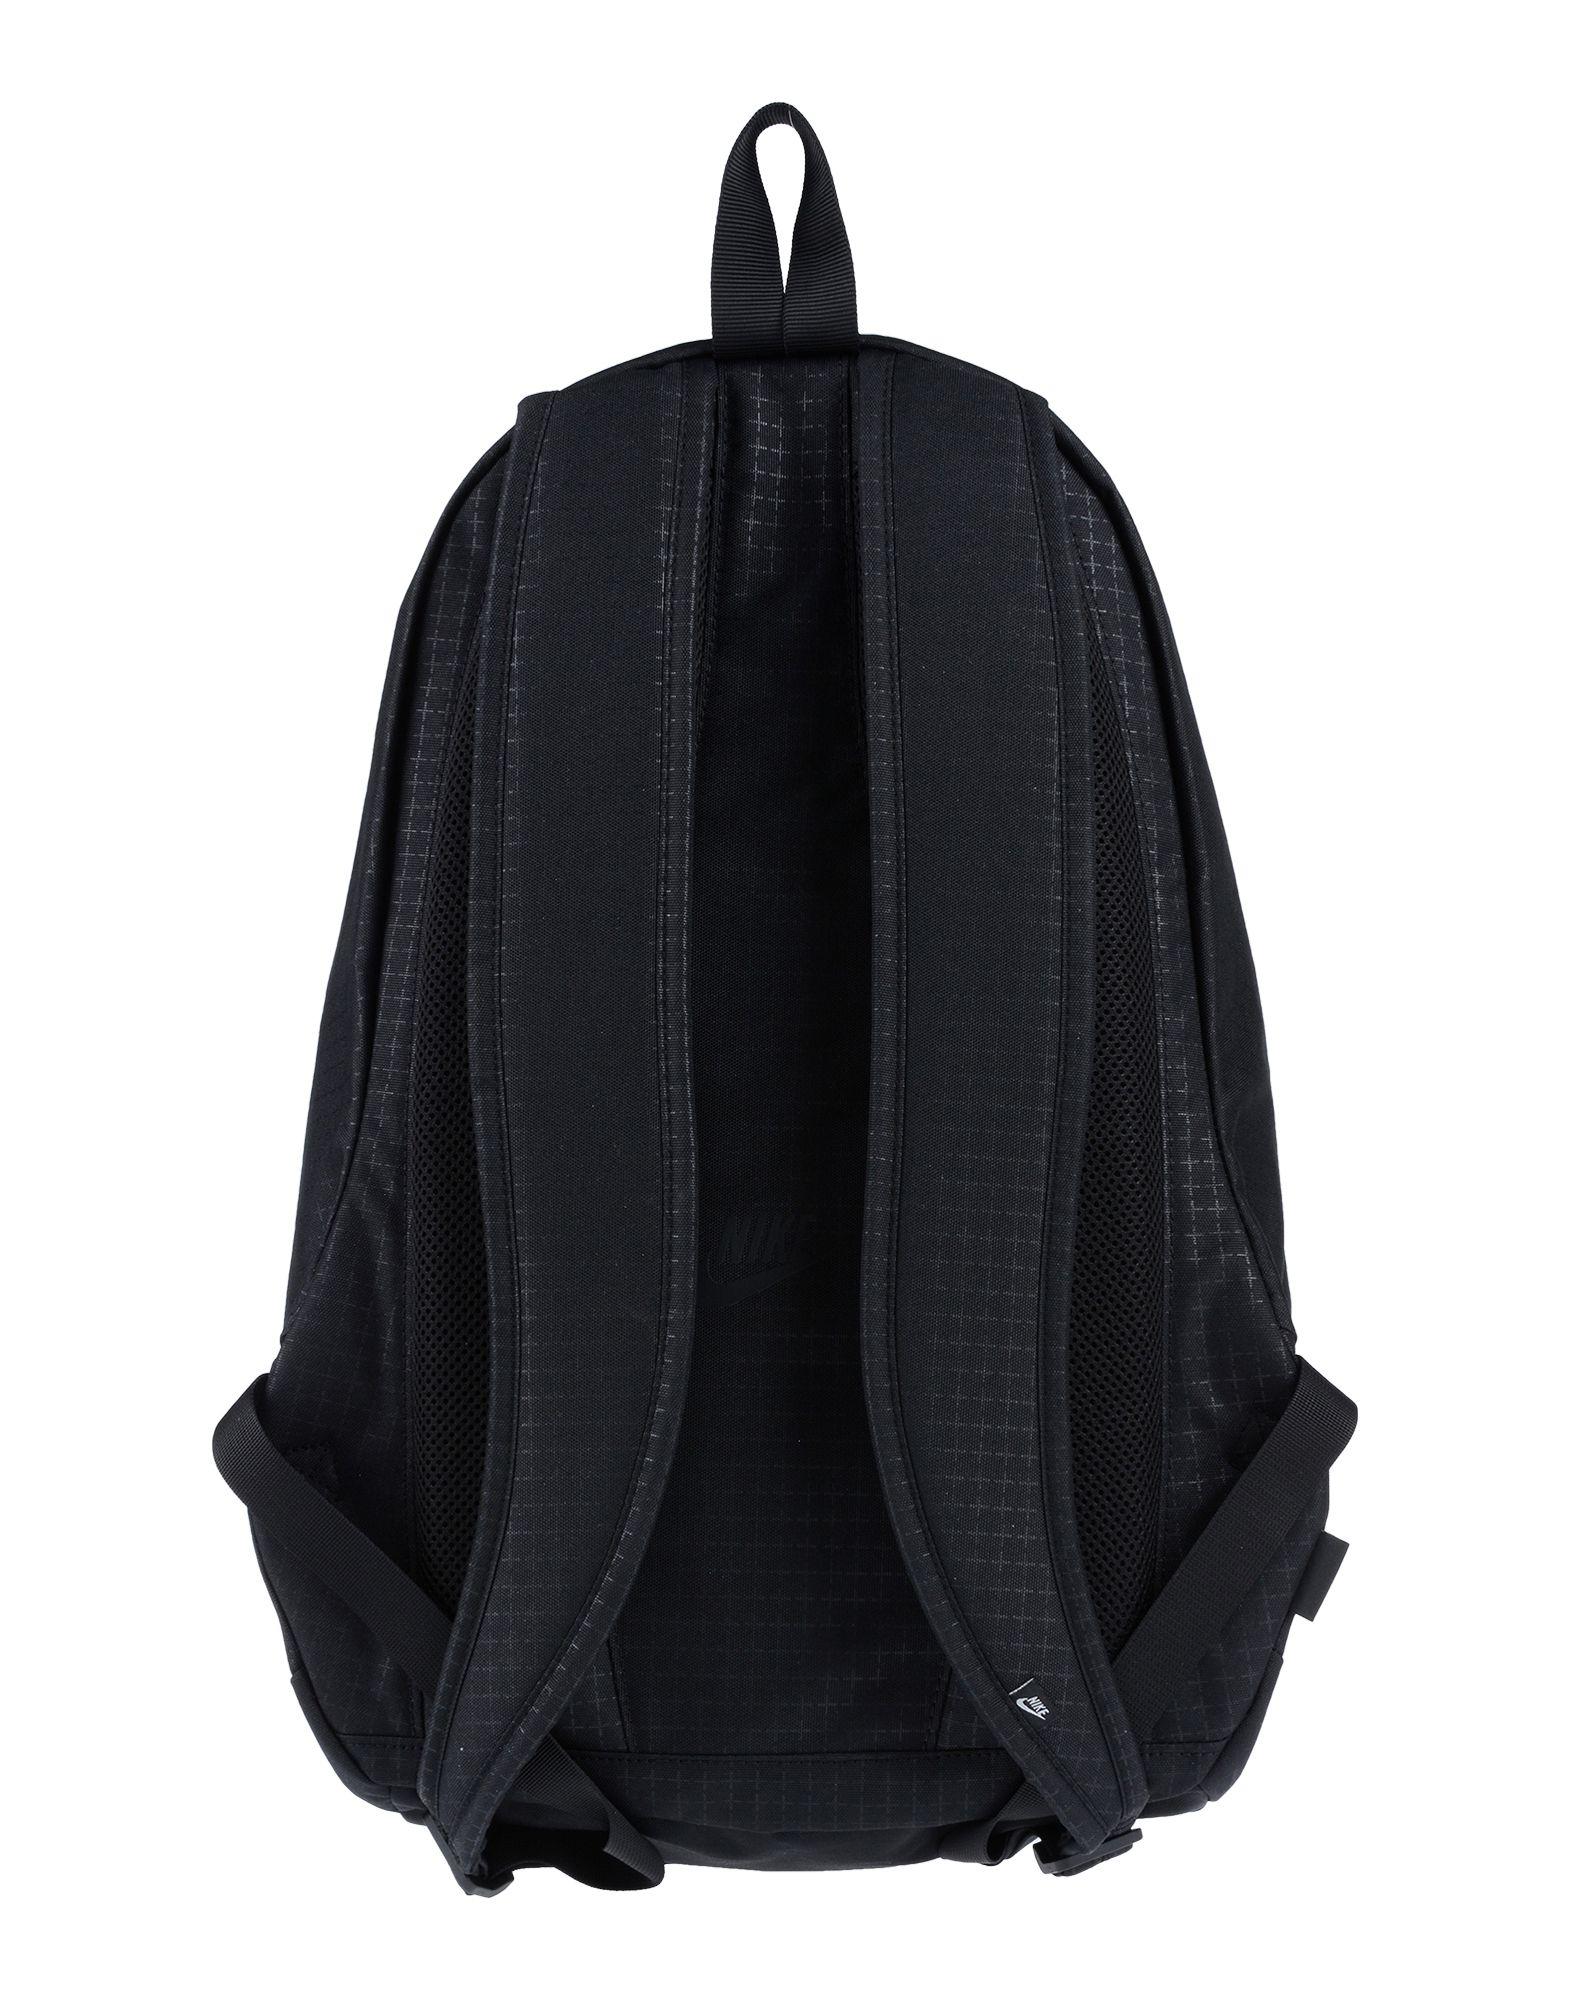 Nike Synthetic Backpacks & Fanny Packs in Black for Men - Lyst